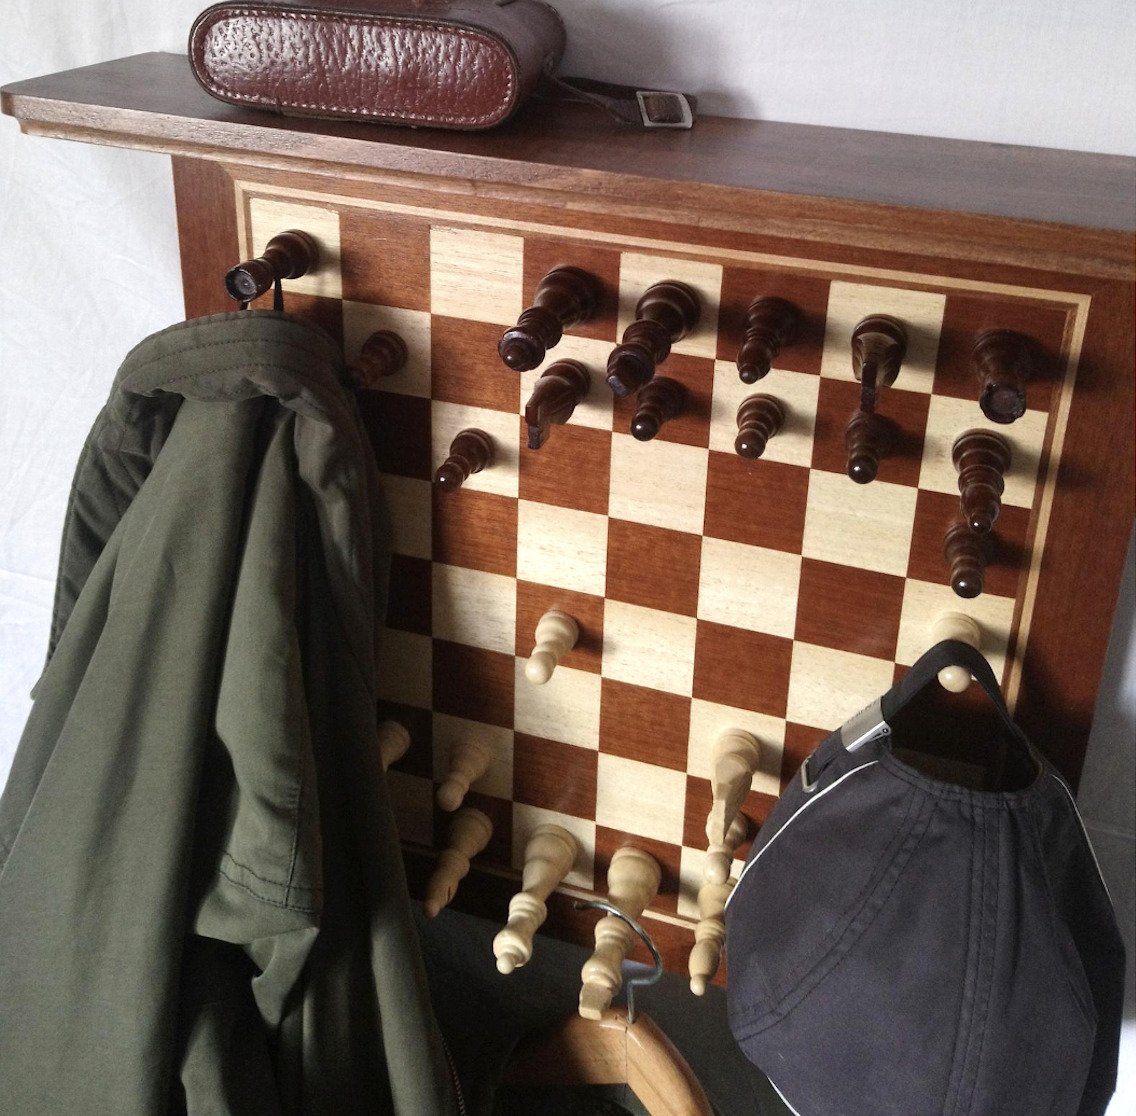 Chessboard Coat Hanger Shelf